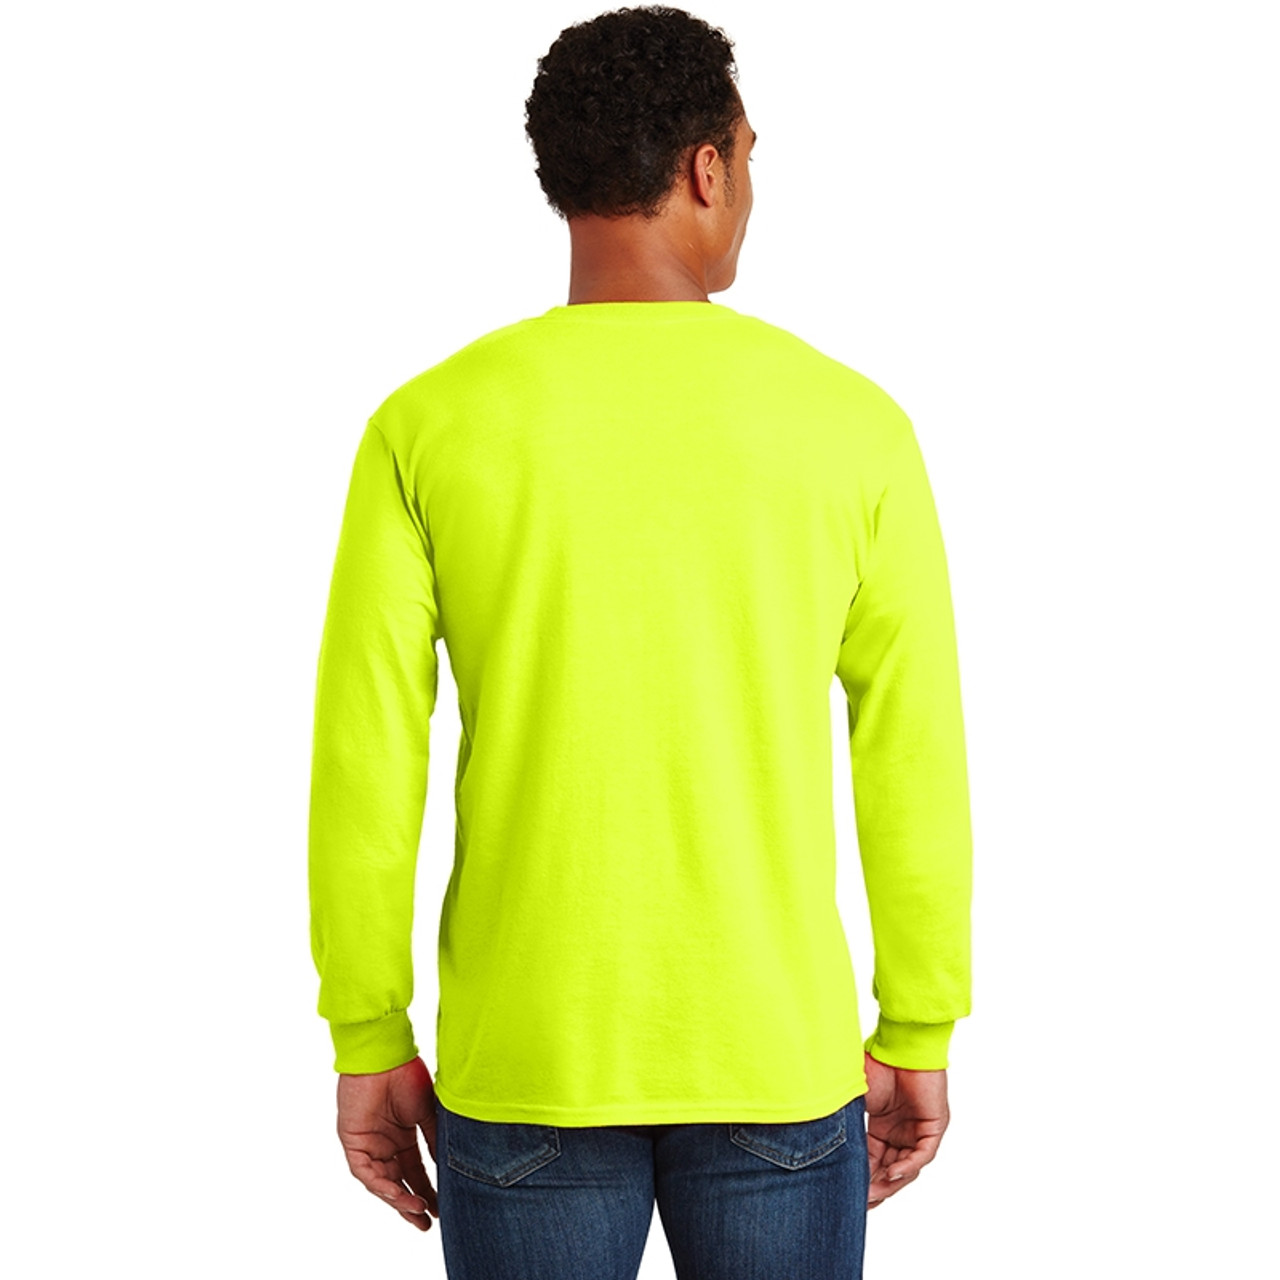 Gildan Enhanced Visibility Ultra Cotton Long Sleeve T-Shirt with